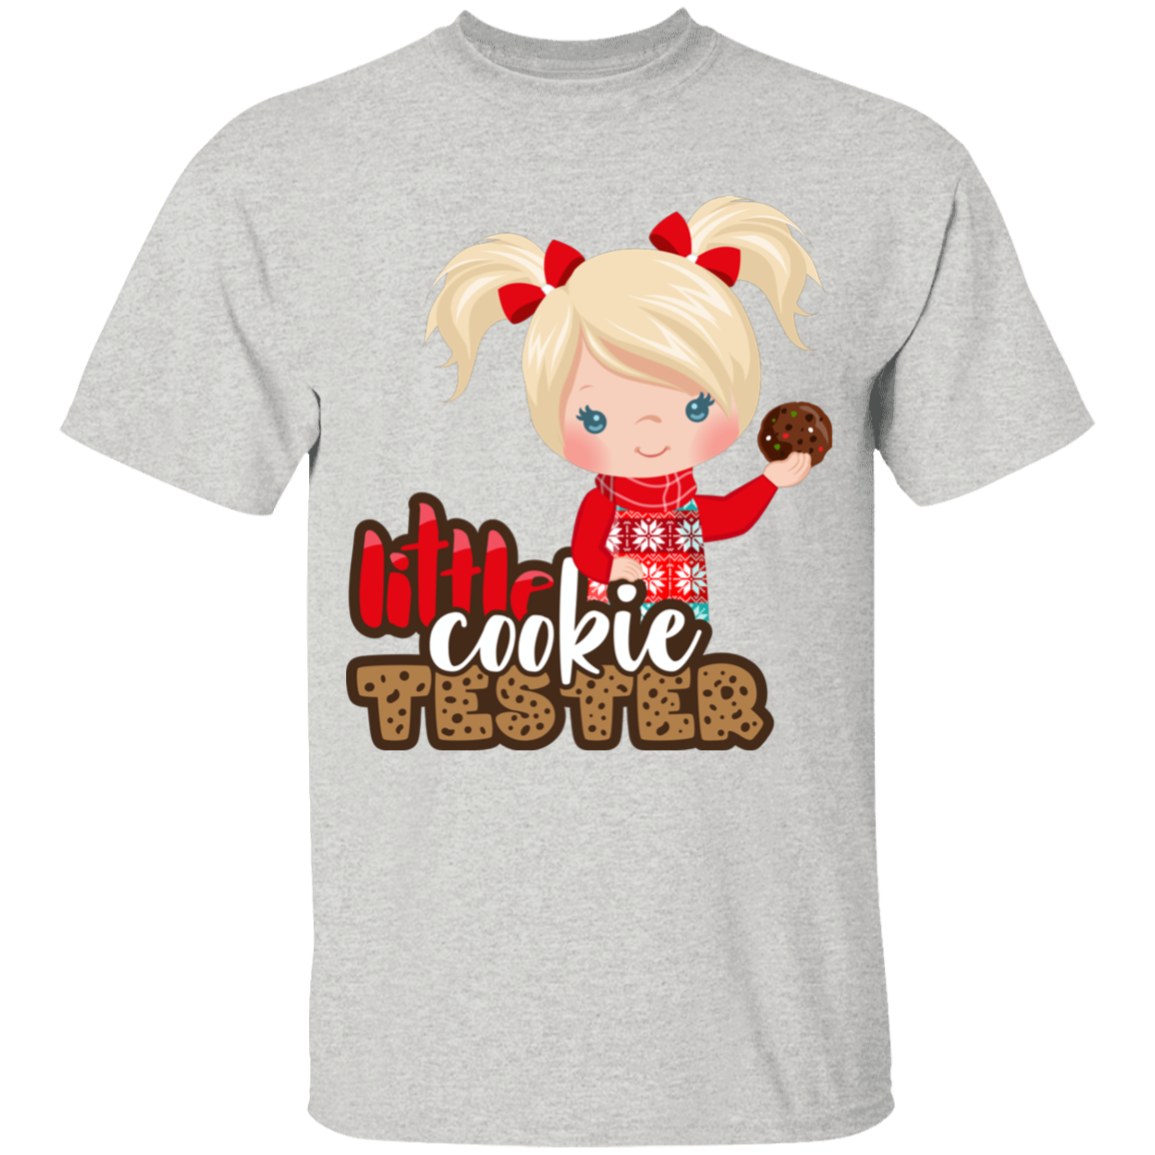 Little Cookie Tester Blonde Hair Girl 100% Cotton T-Shirt